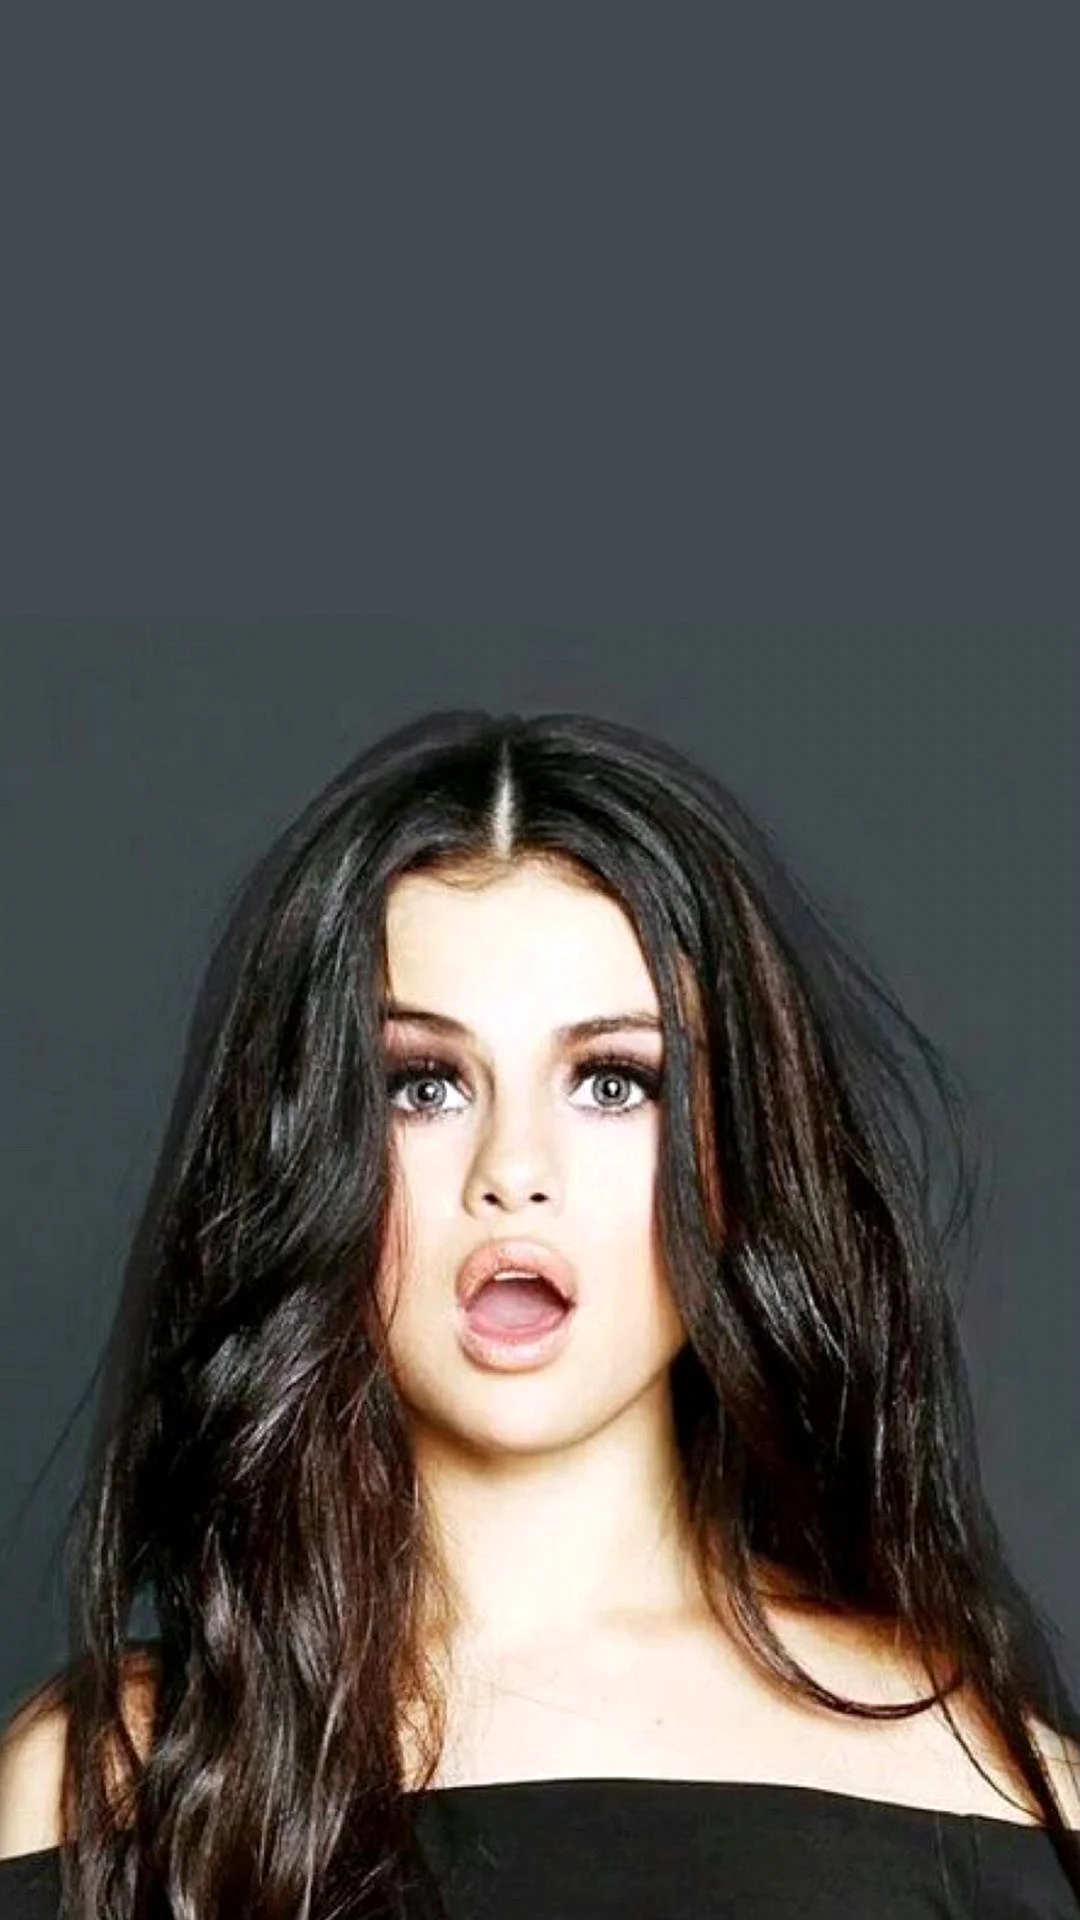 Selena Gomez iPhone Wallpaper For iPhone